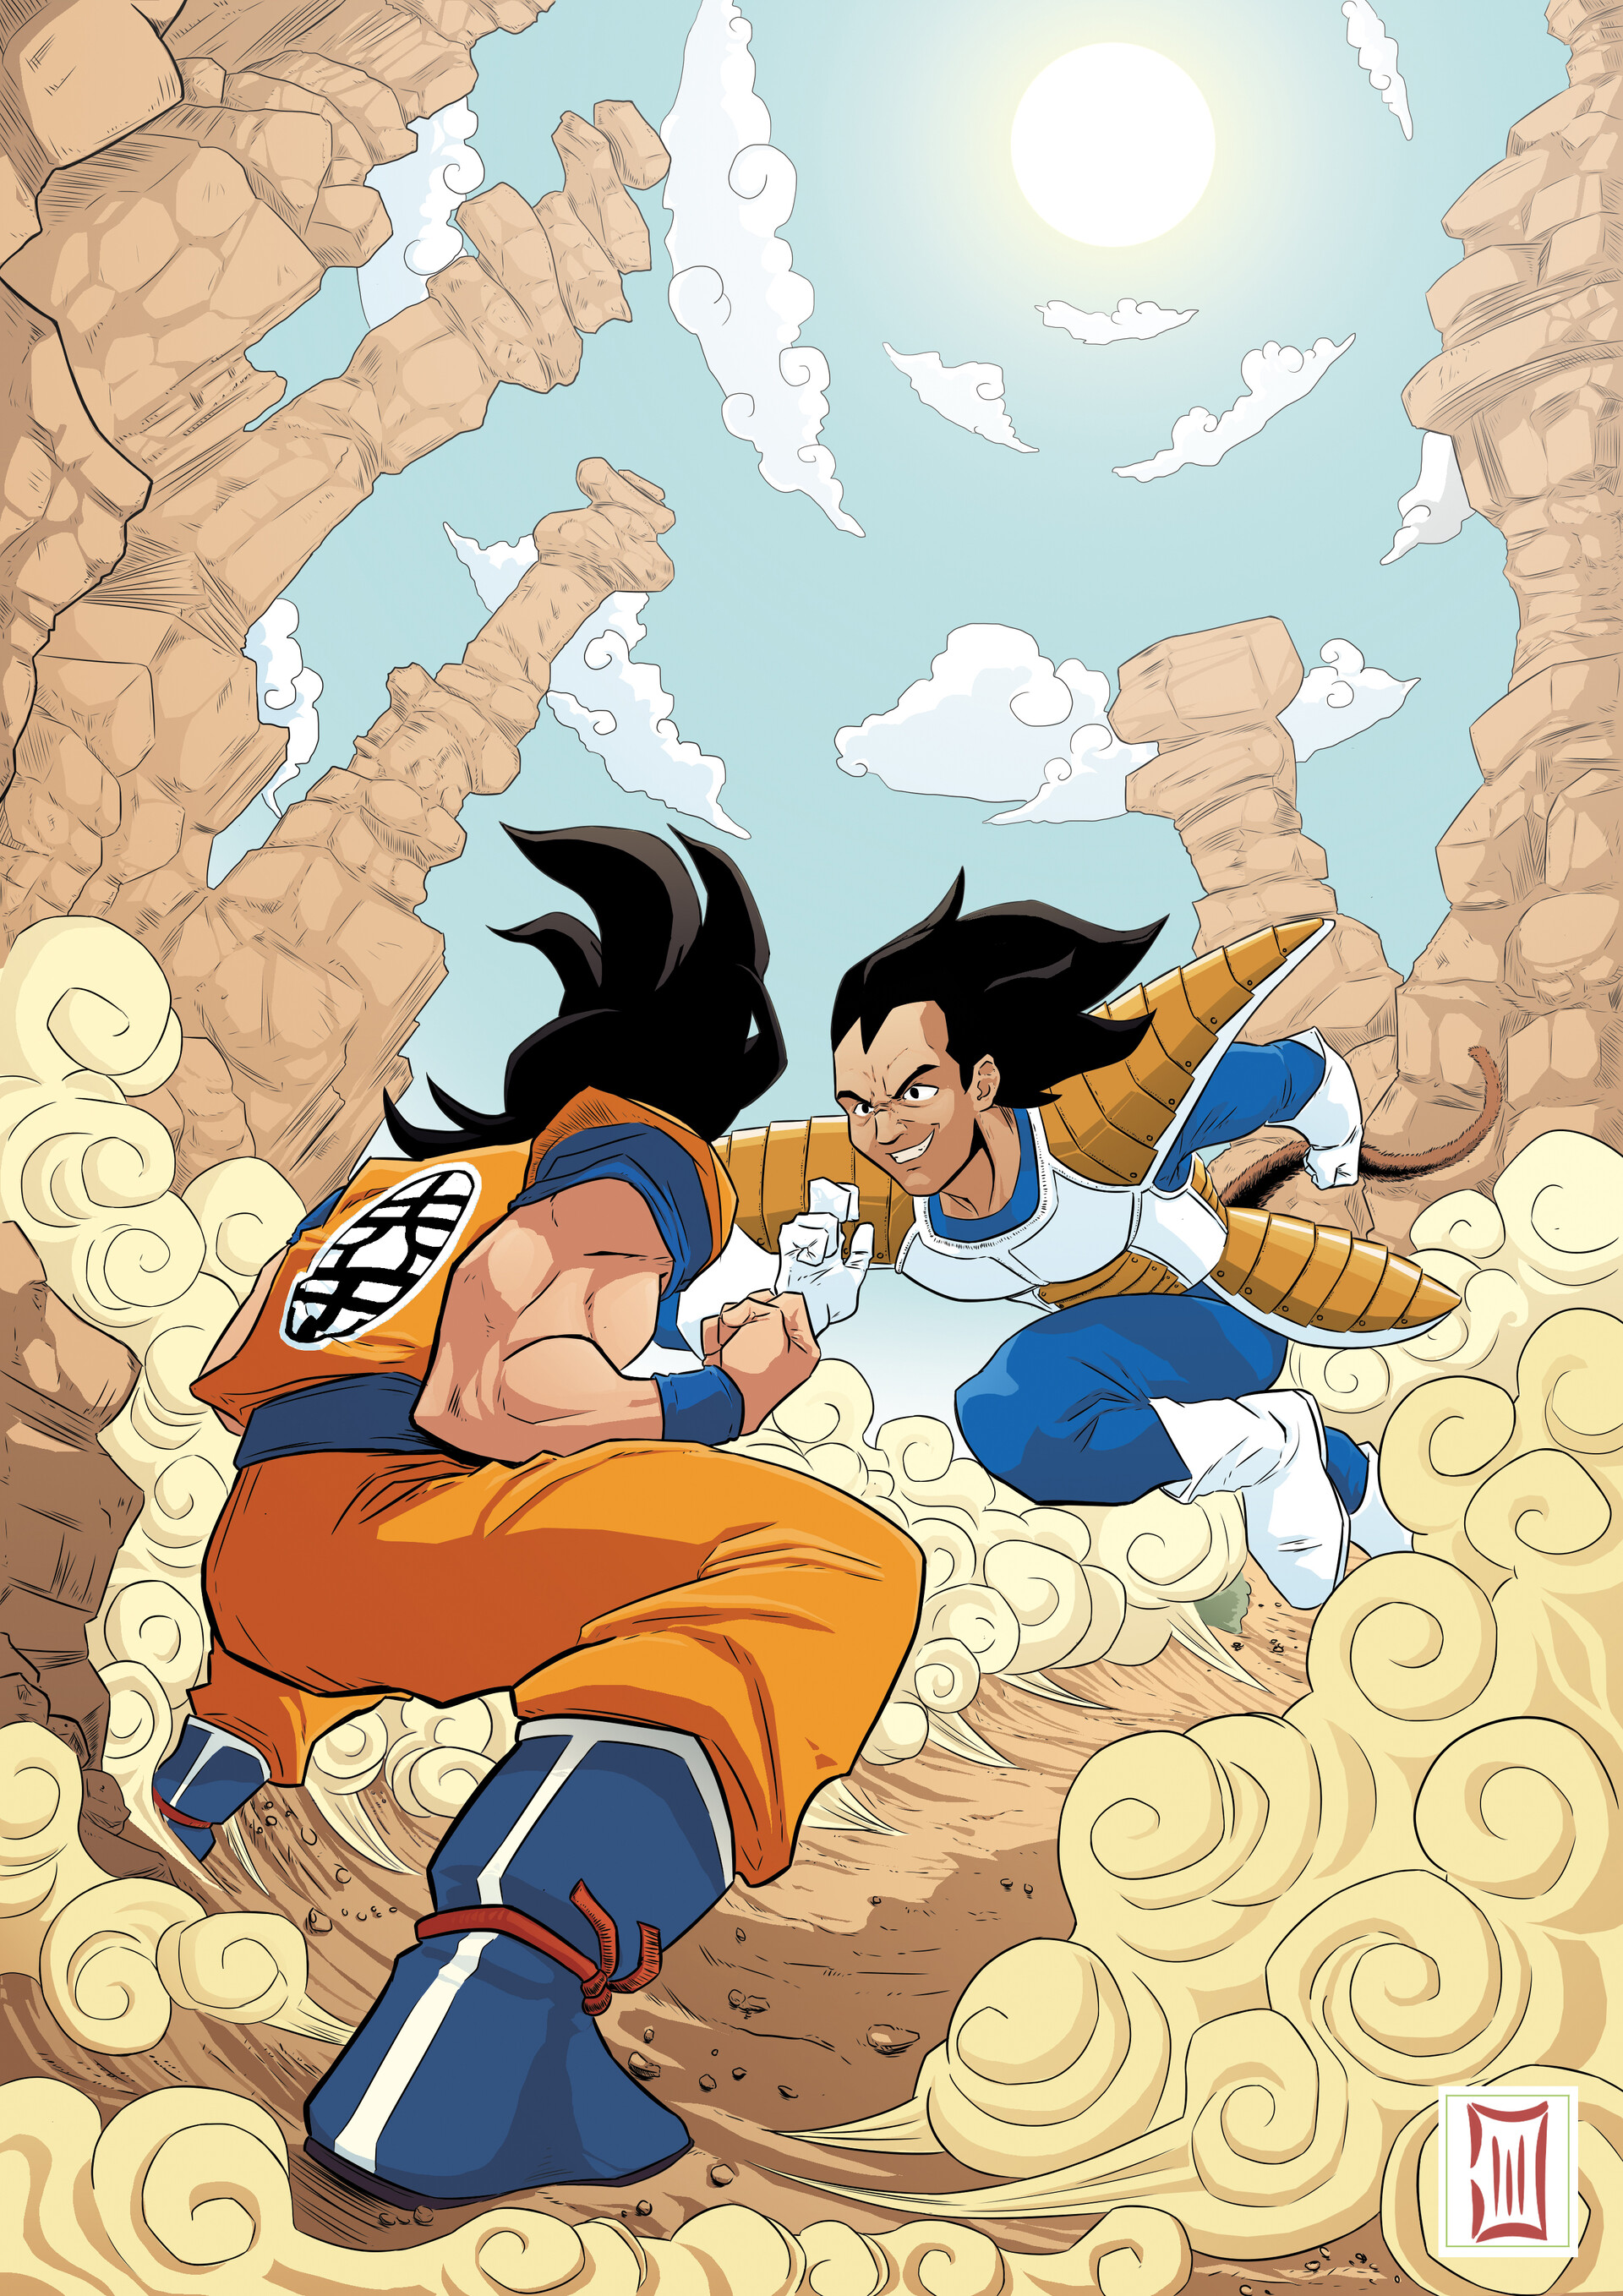 Son Goku, dragon ball, super saiyan, White hair, fighting pose - SeaArt AI